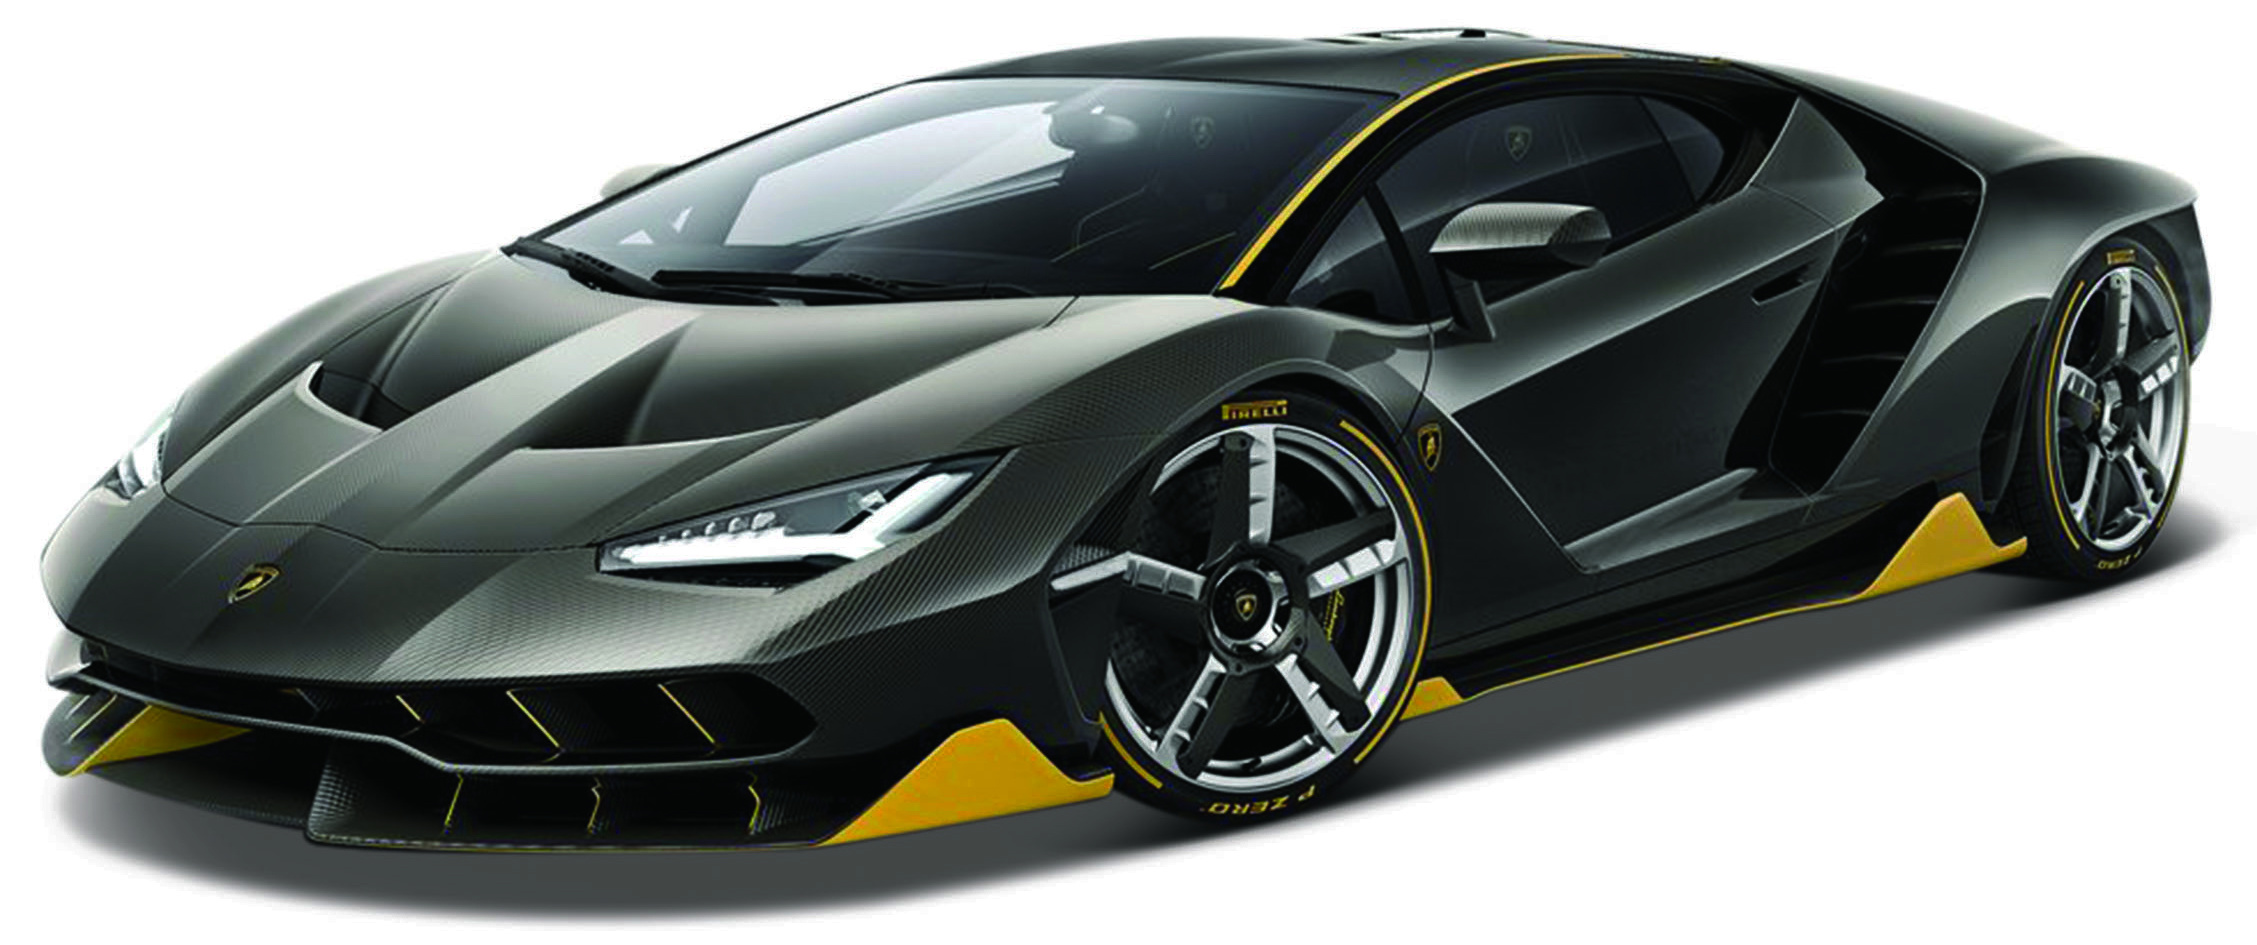  Maisto  RC Auto Lamborghini  Centenario 2 4 GHz 1 14 schwarz 